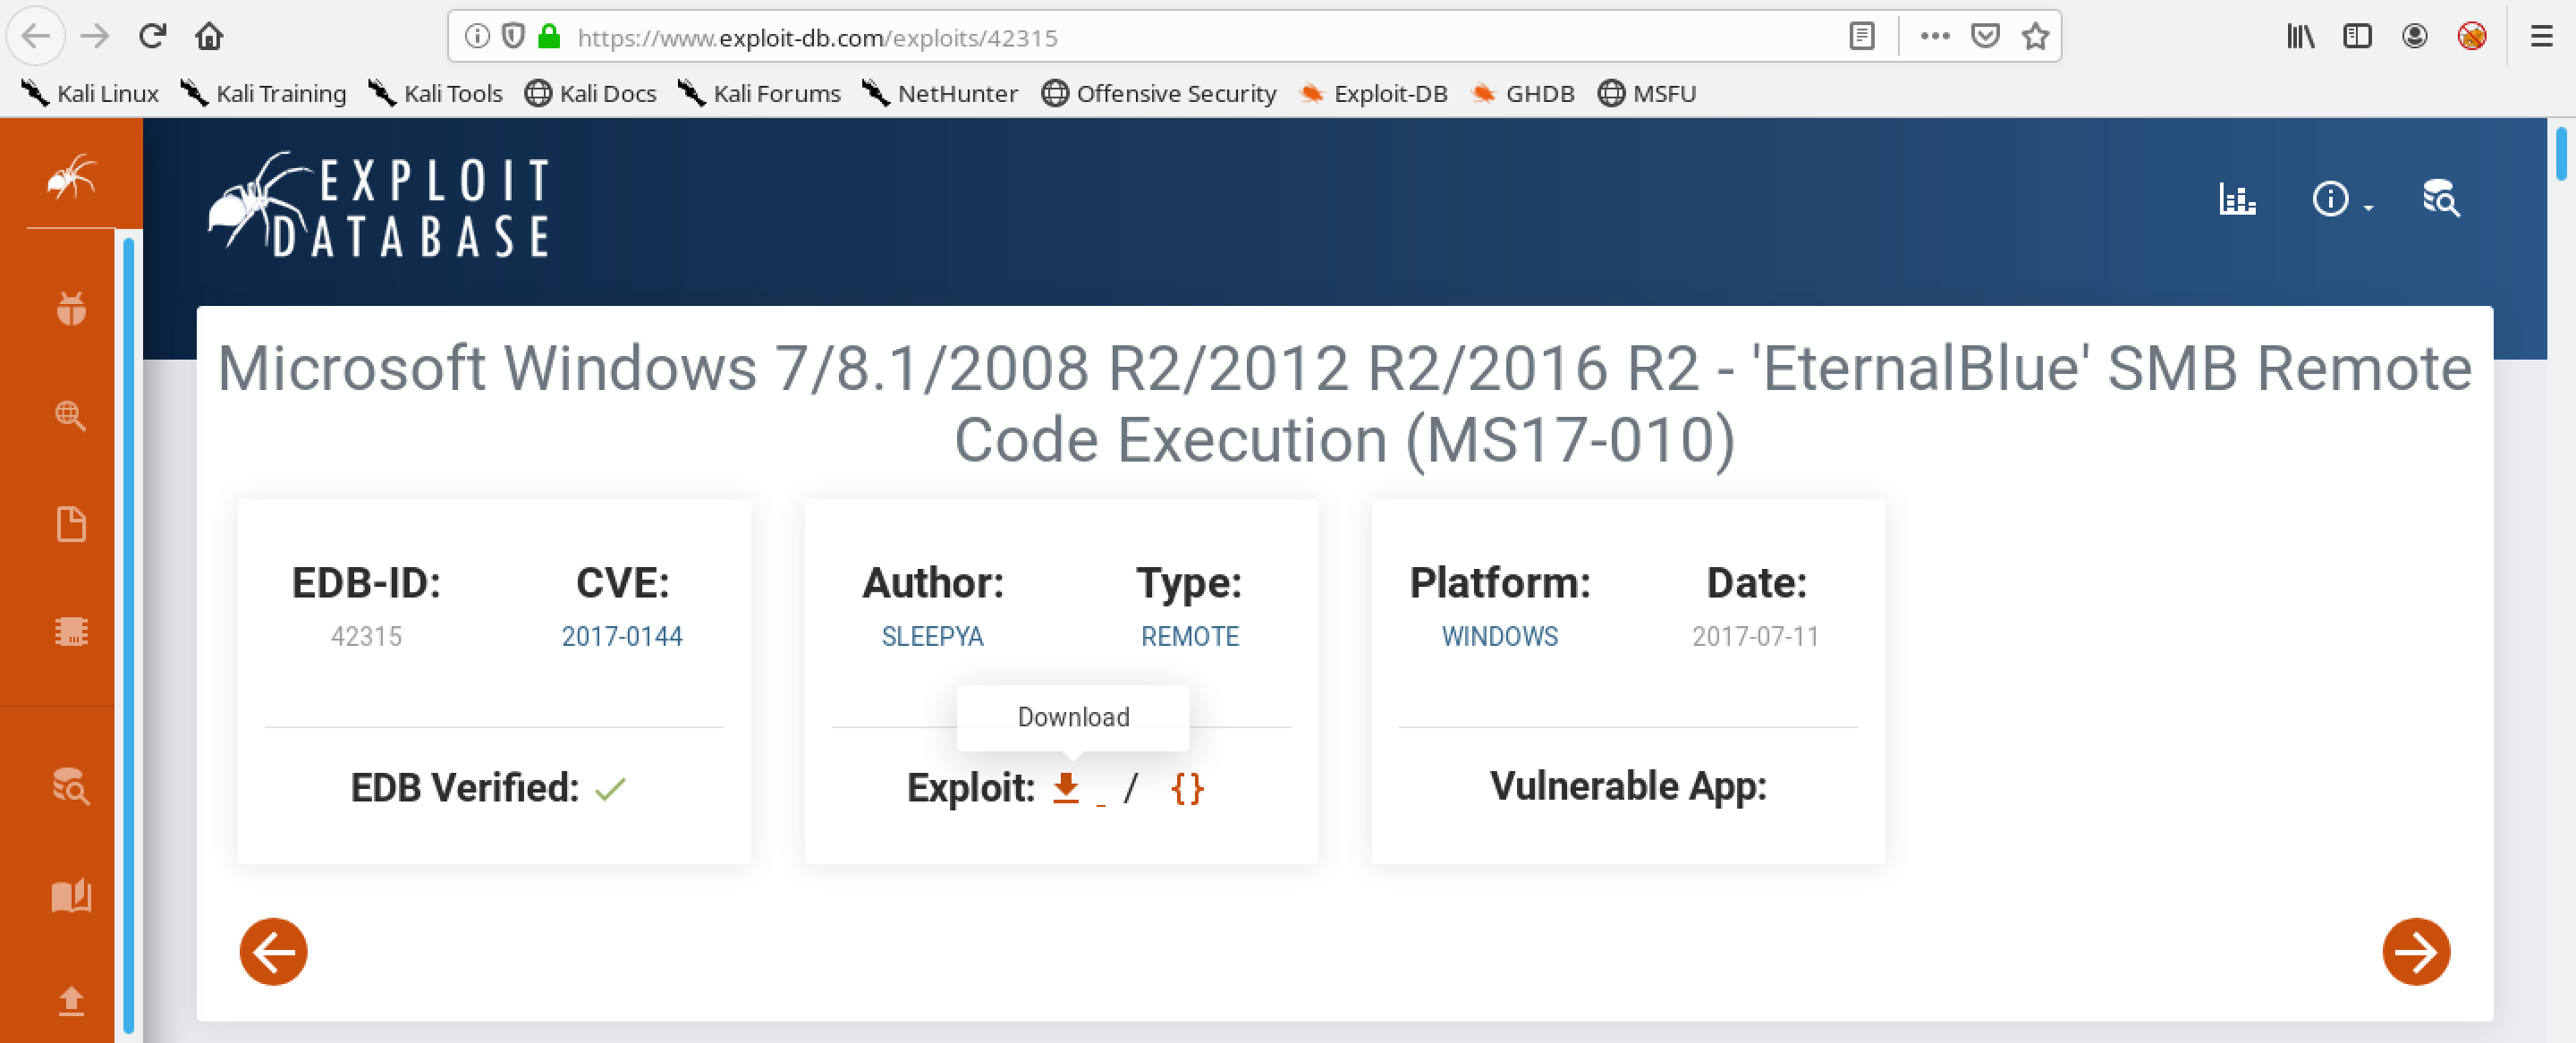 Exploit page in the Exploit Database (www.exploit-db.com).